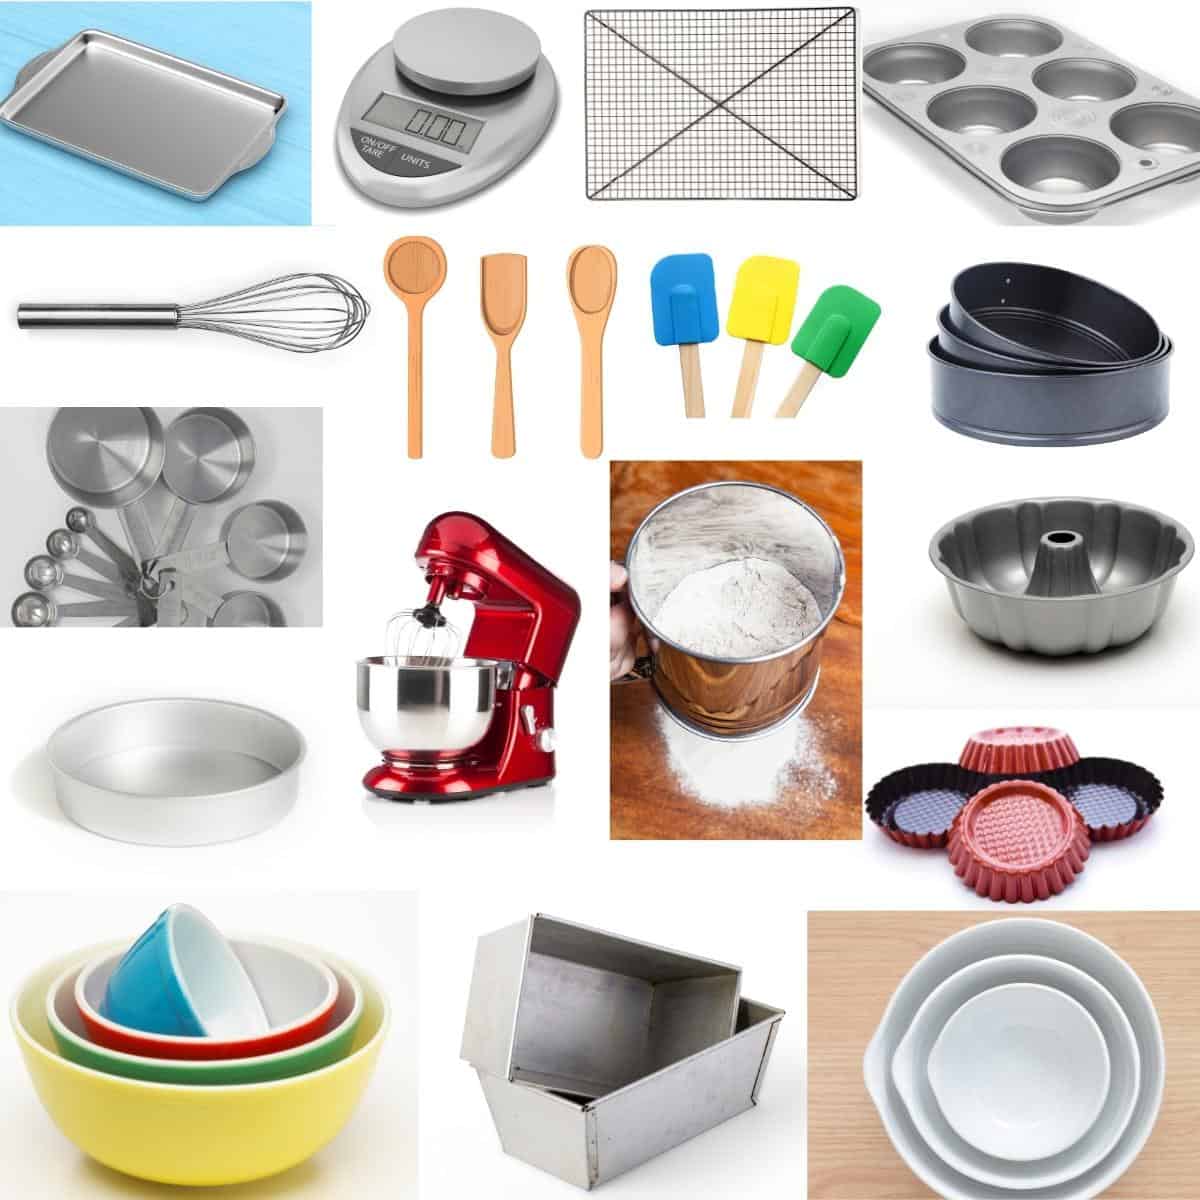 https://veenaazmanov.com/wp-content/uploads/2018/10/15-baking-tools-every-baker-needs.jpeg